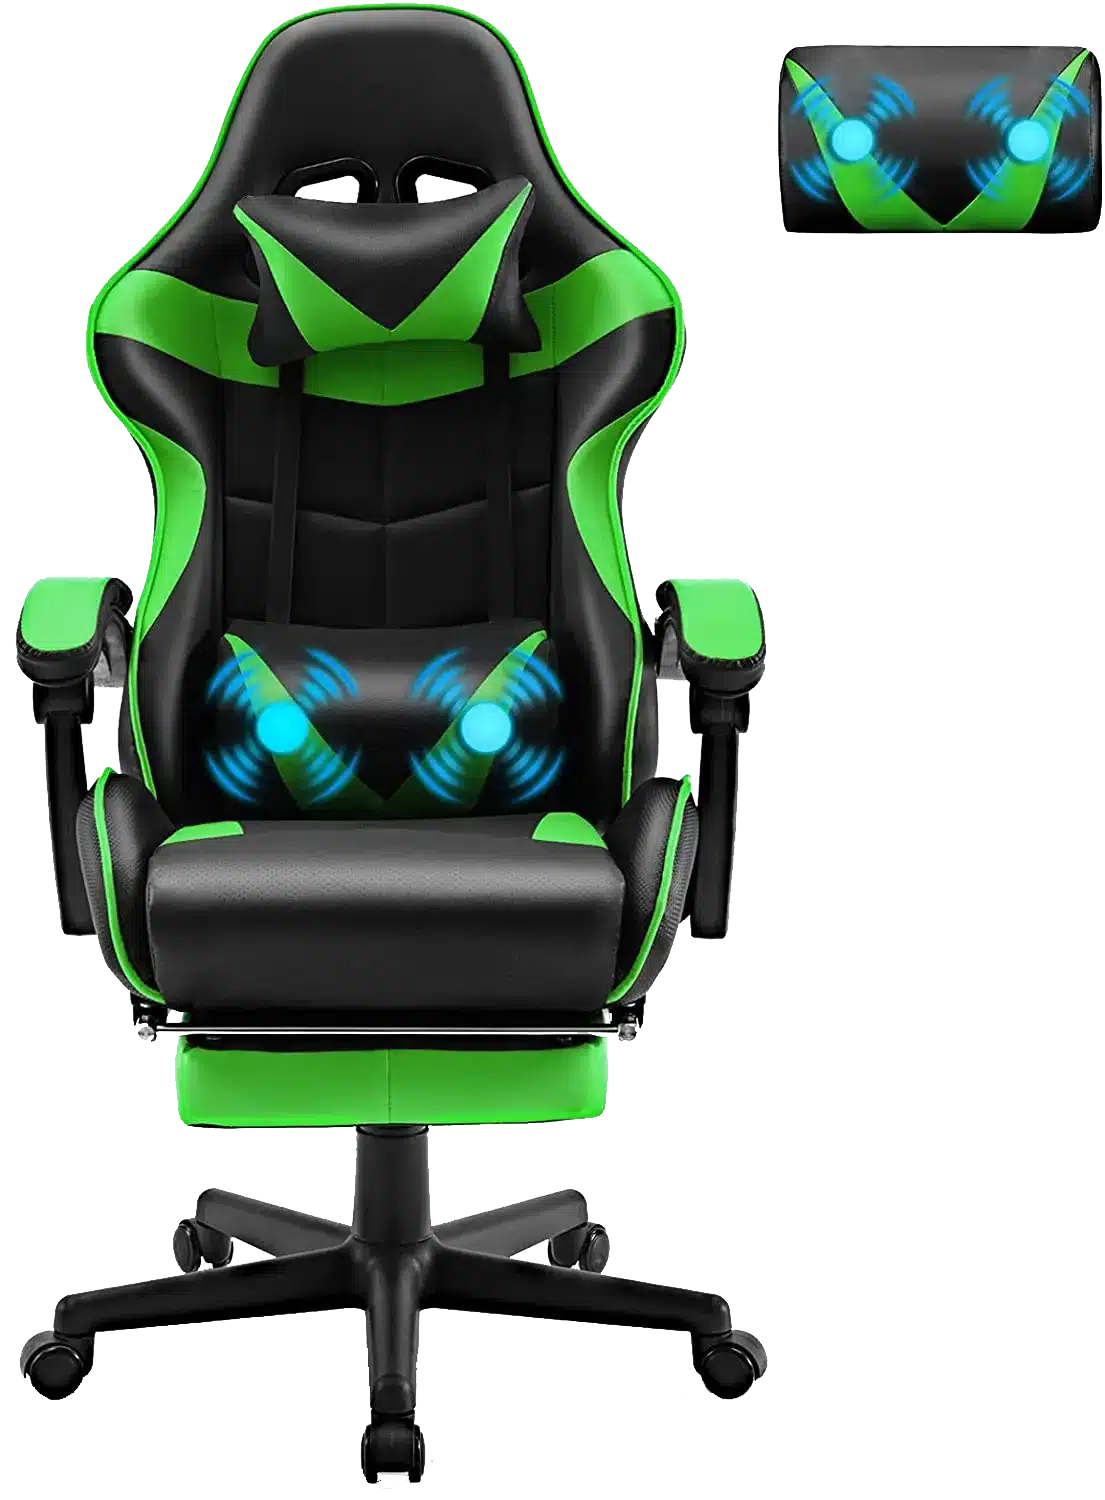 Sedia da Gaming Massaggiante Soontrans, colore Verde